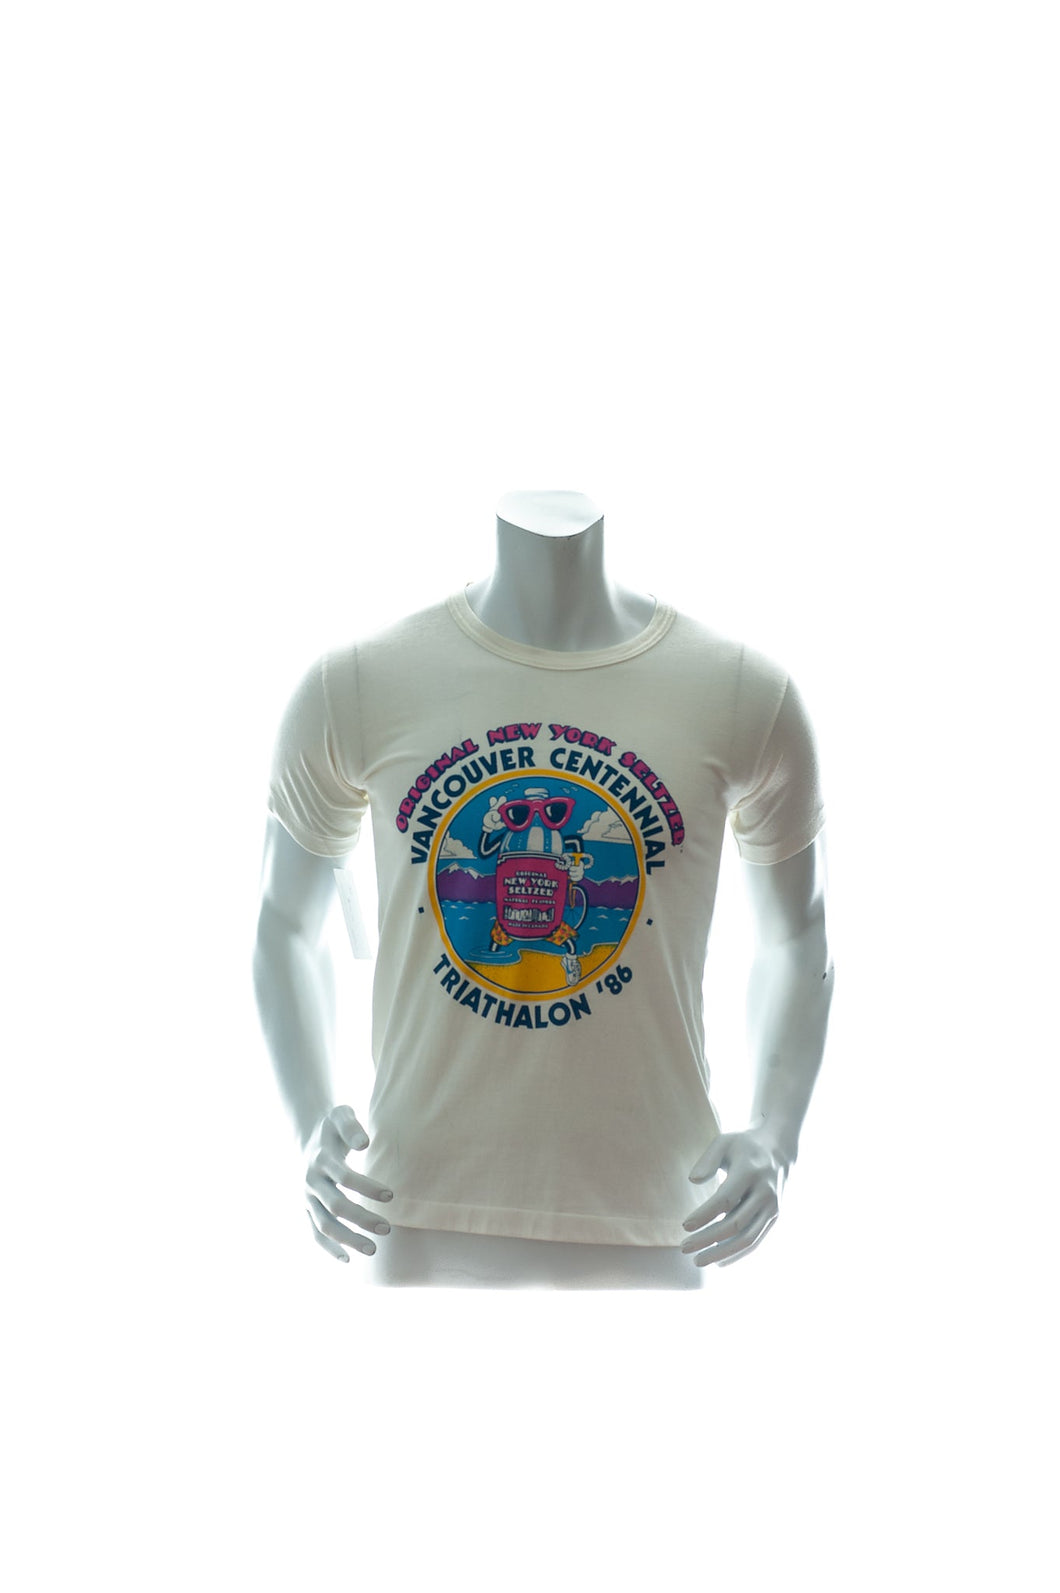 Vintage 1986 Original New York Seltzer Vancouver Centennial Triathlon Single Stitch T-Shirt Mens Small